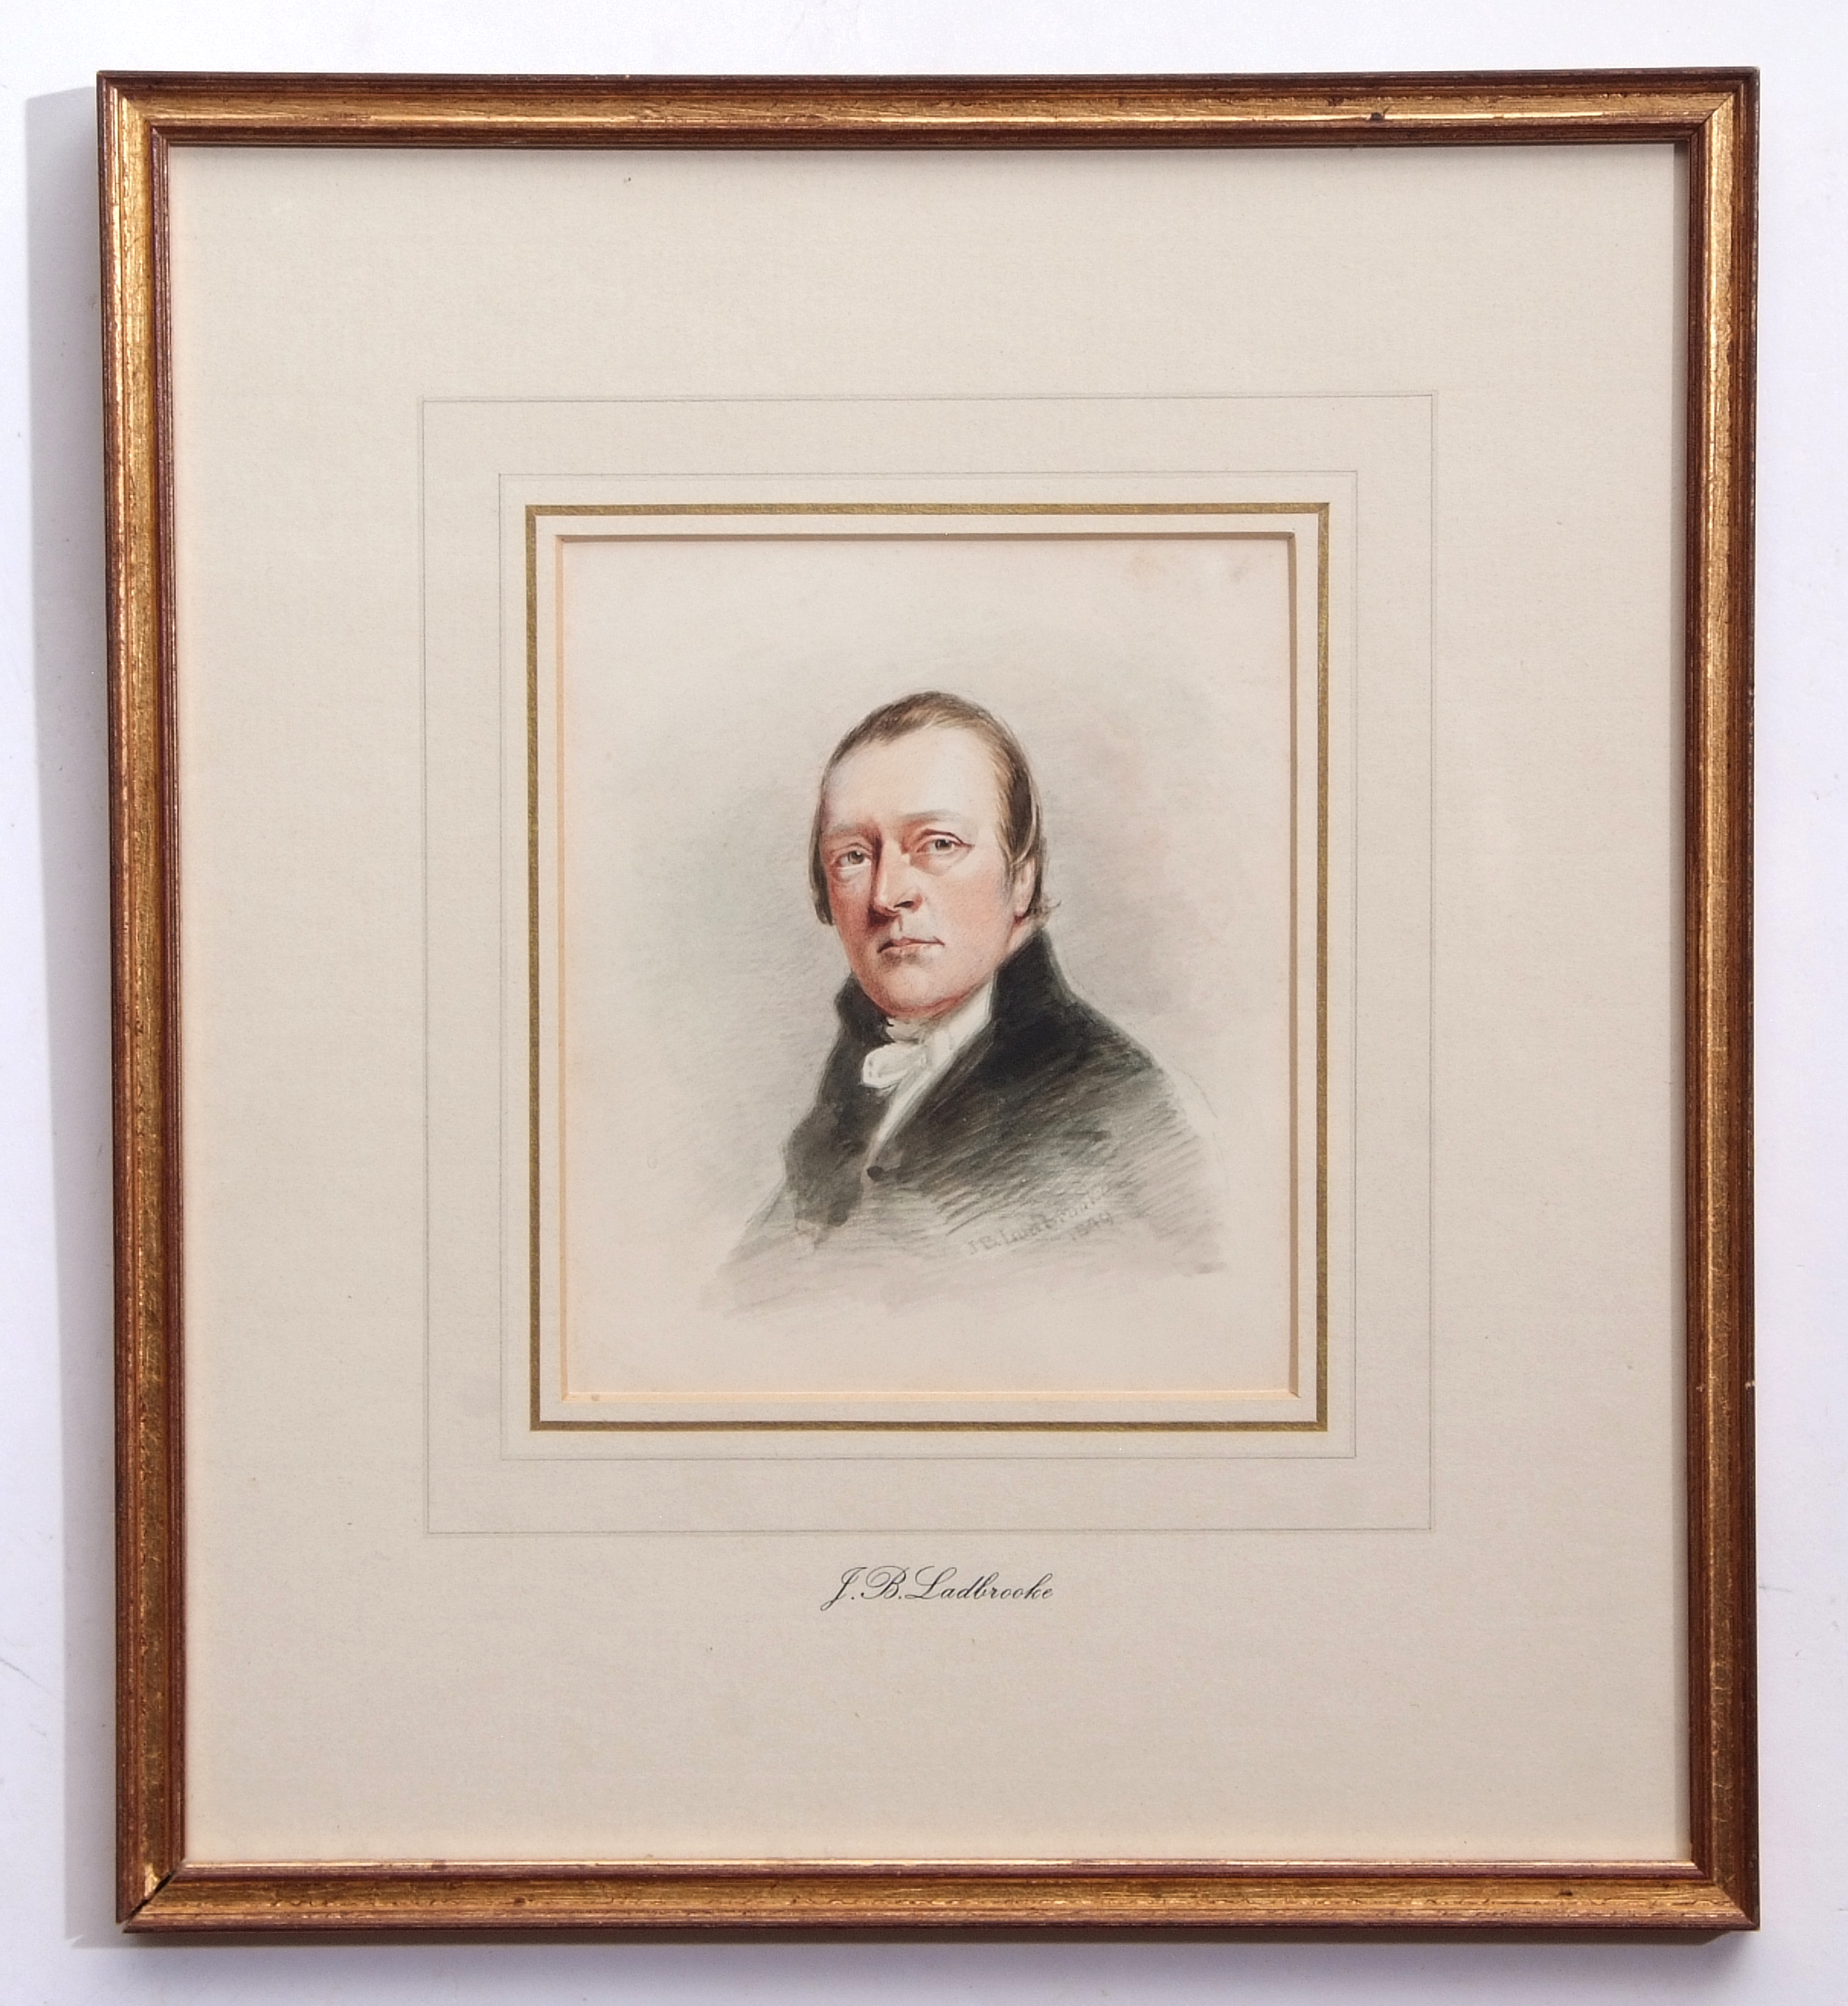 John Berney Ladbrooke, signed and dated 1849, watercolour, Portrait of Dr James Alderson, 16 x 13cm,